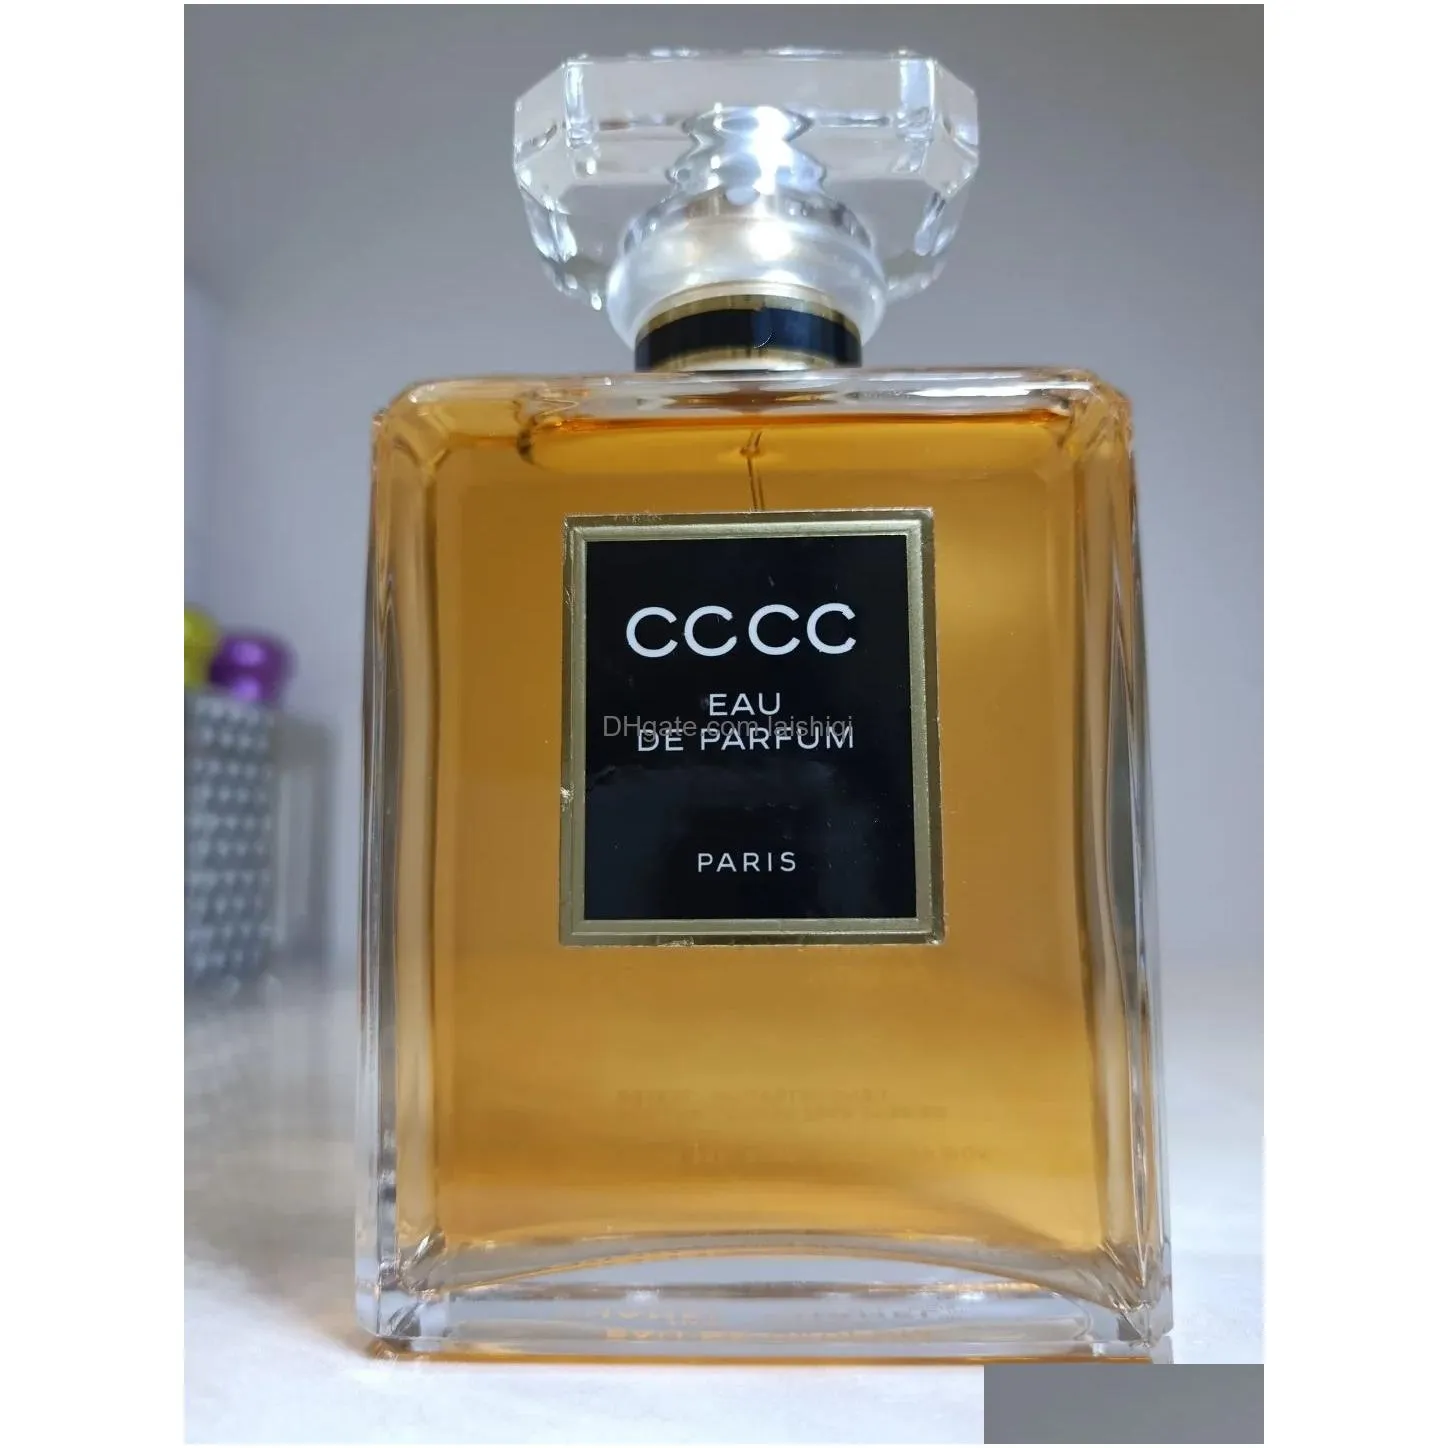 100ml chance perfume for women long-lasting luxury fragrance spray in green